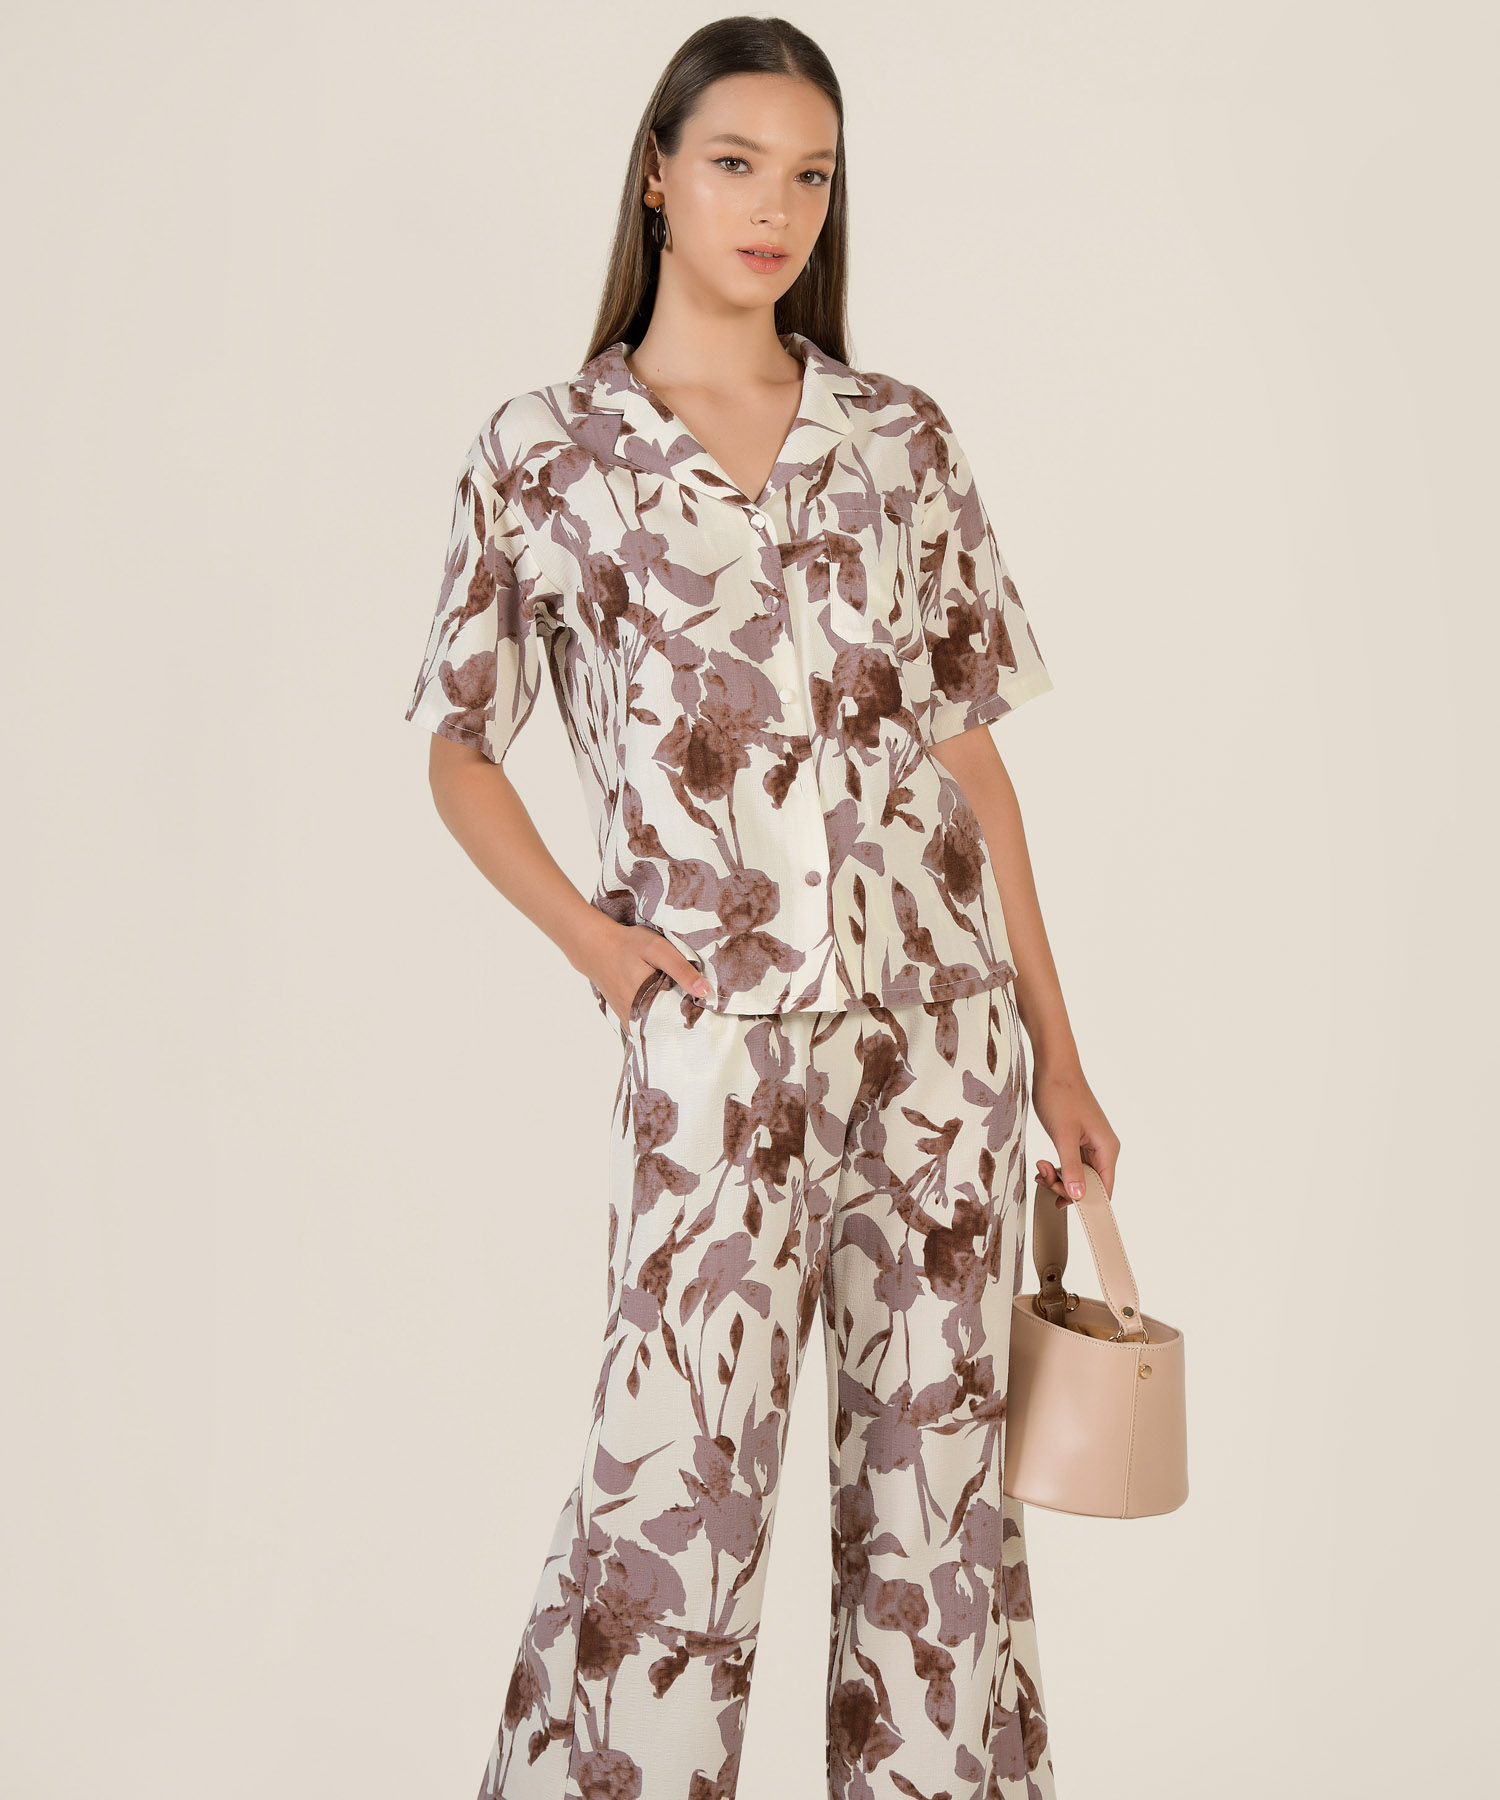 Bellocq Flora Shirt in Iris Women's Clothing Online